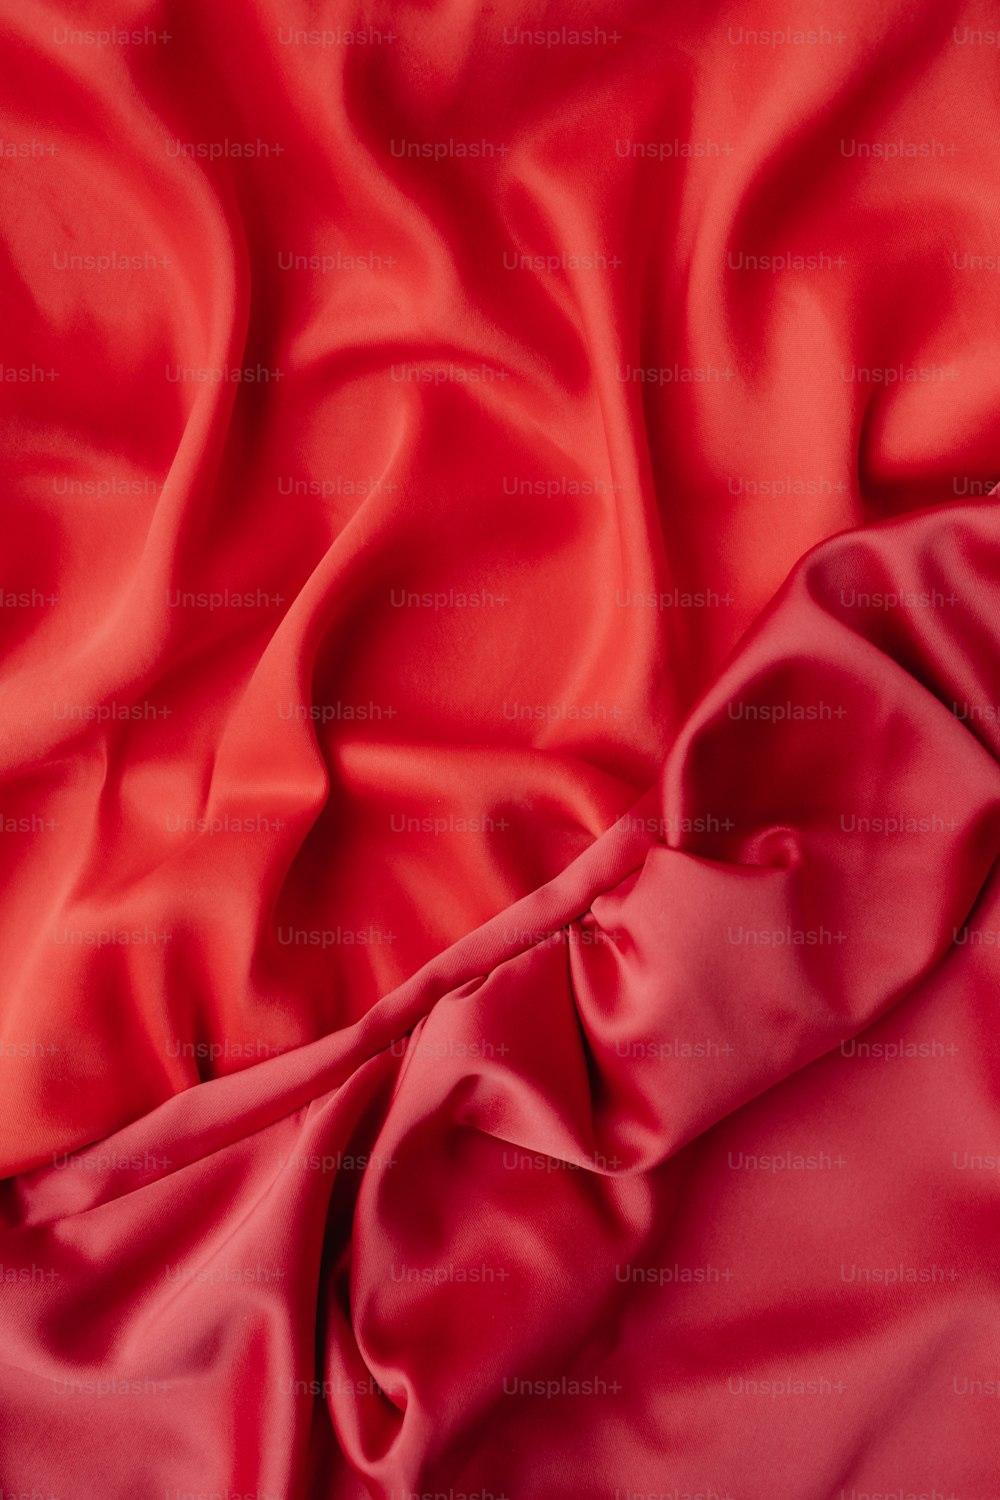 Red Background Mesh fabric Stock Photo